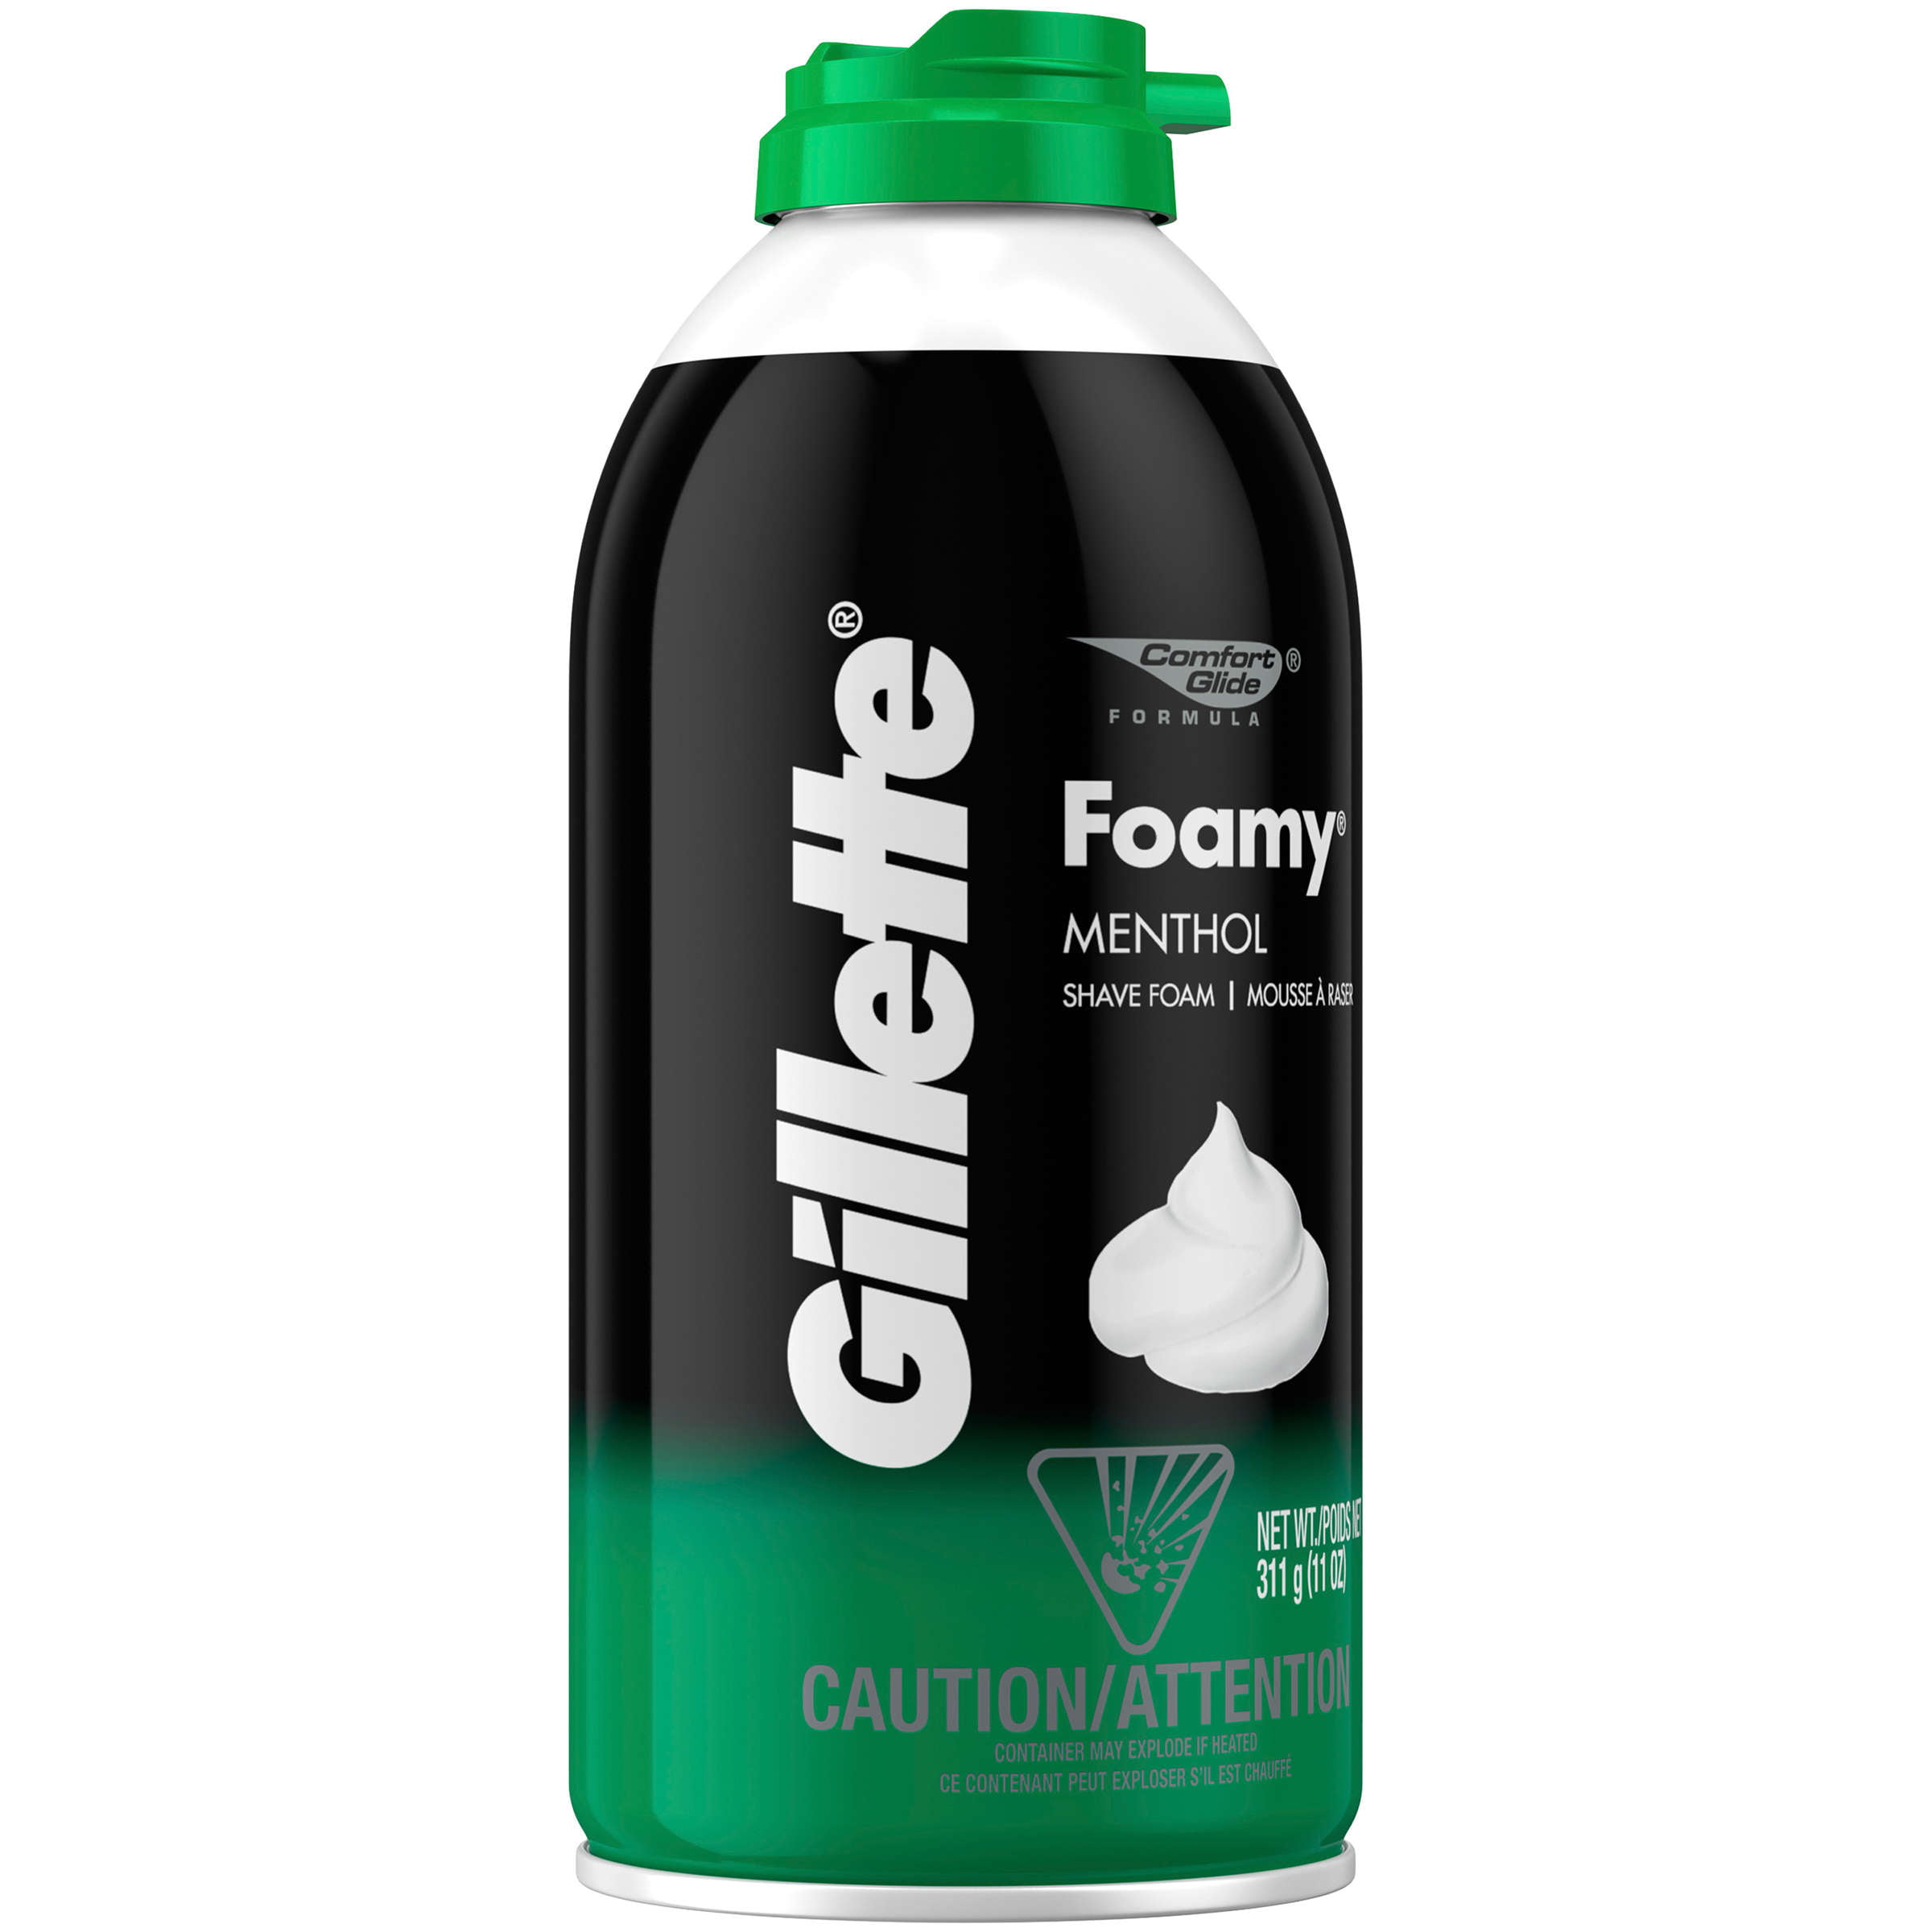 Gillette Foamy Menthol Shave Foam, 11 oz